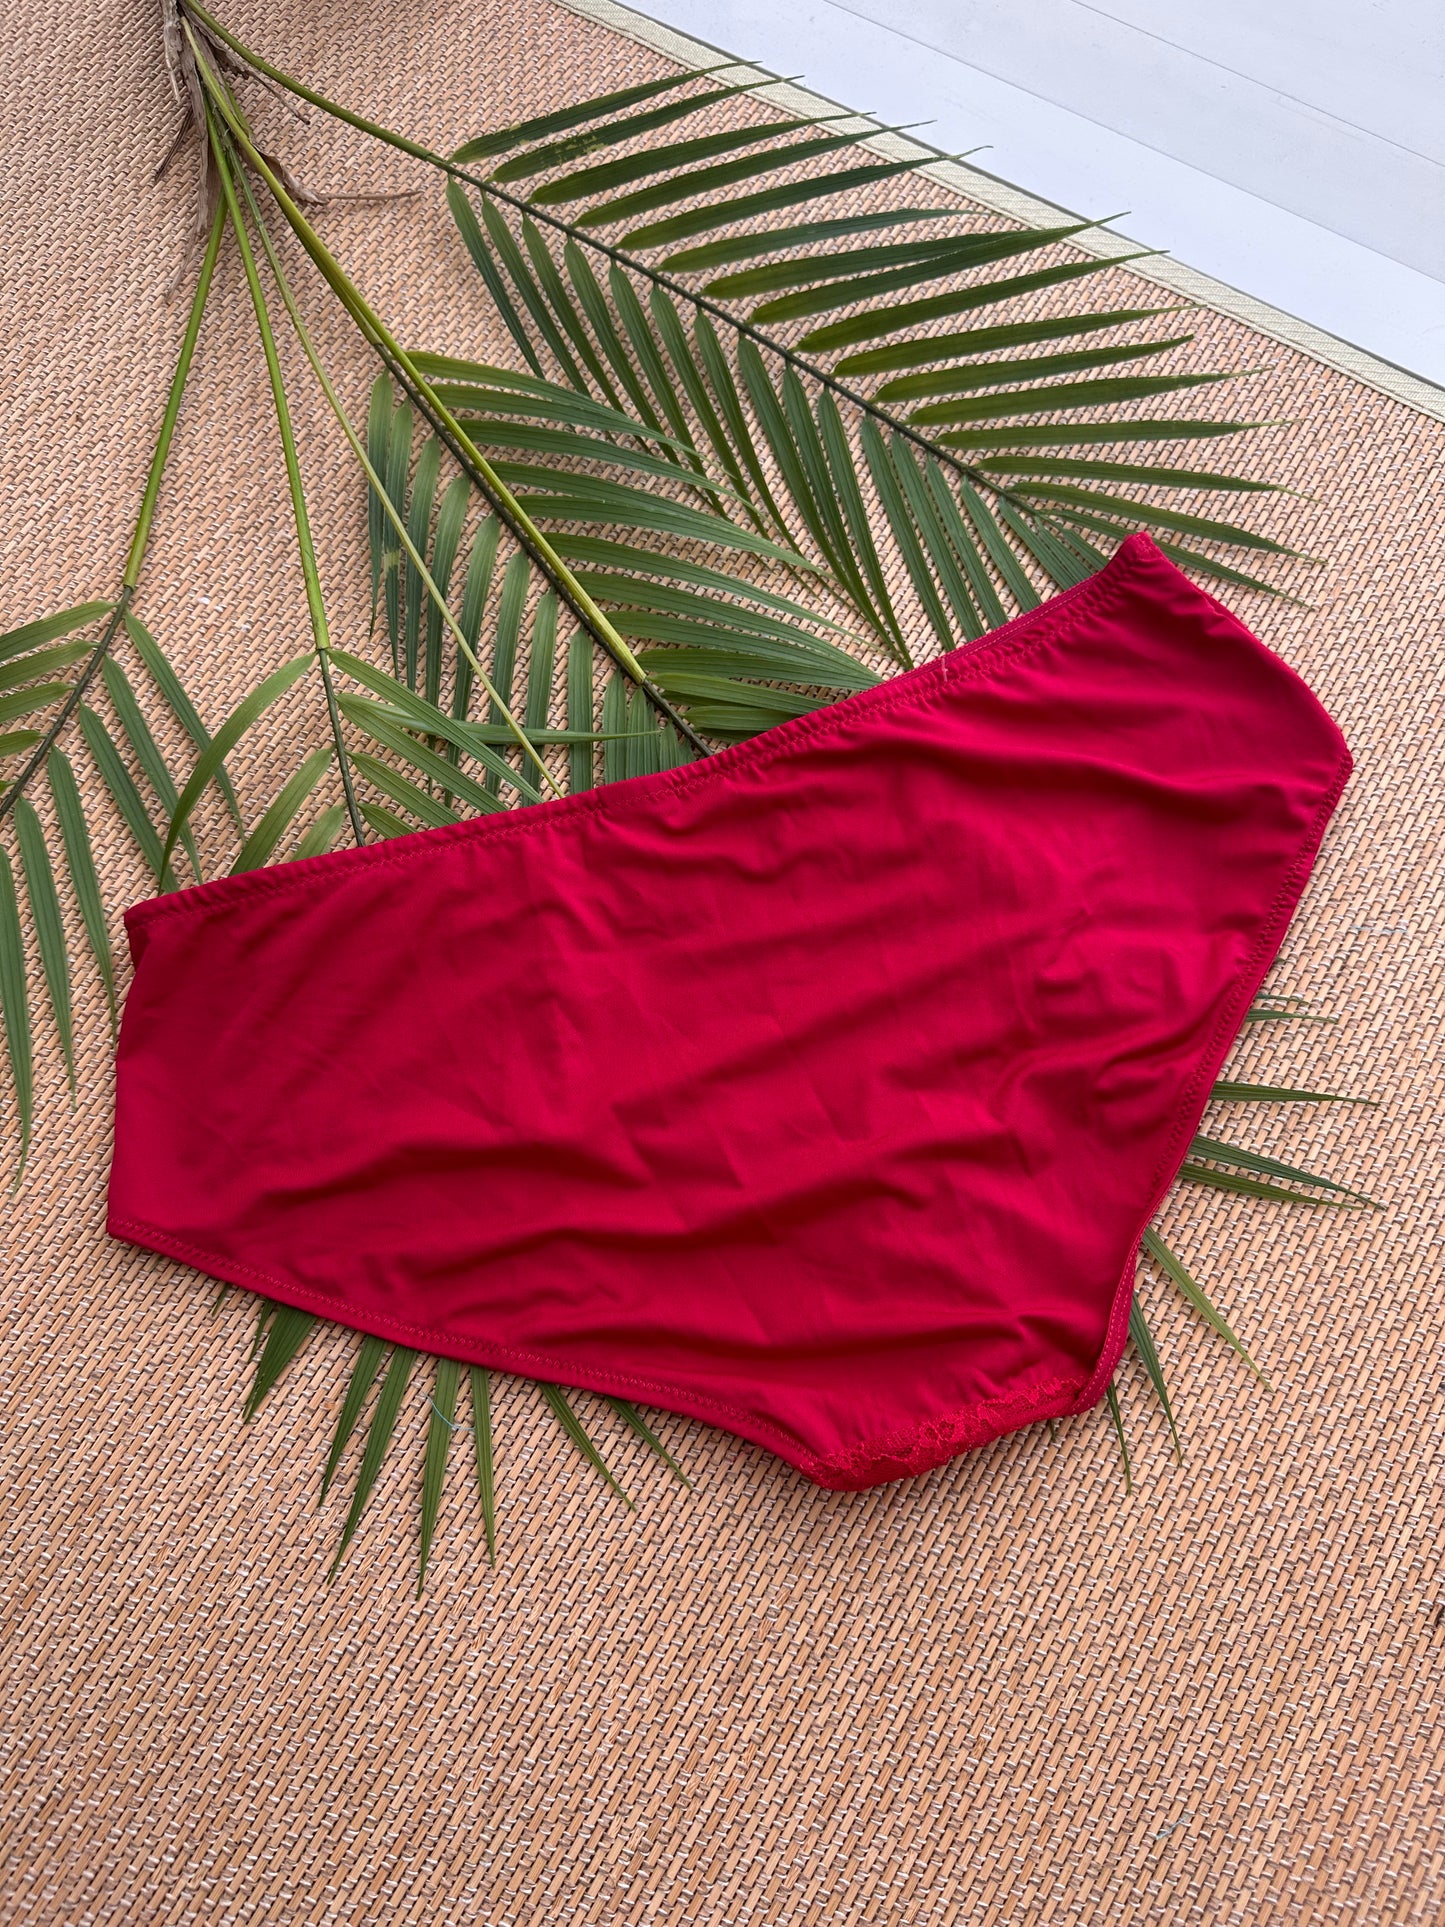 PB Red Lace Panty